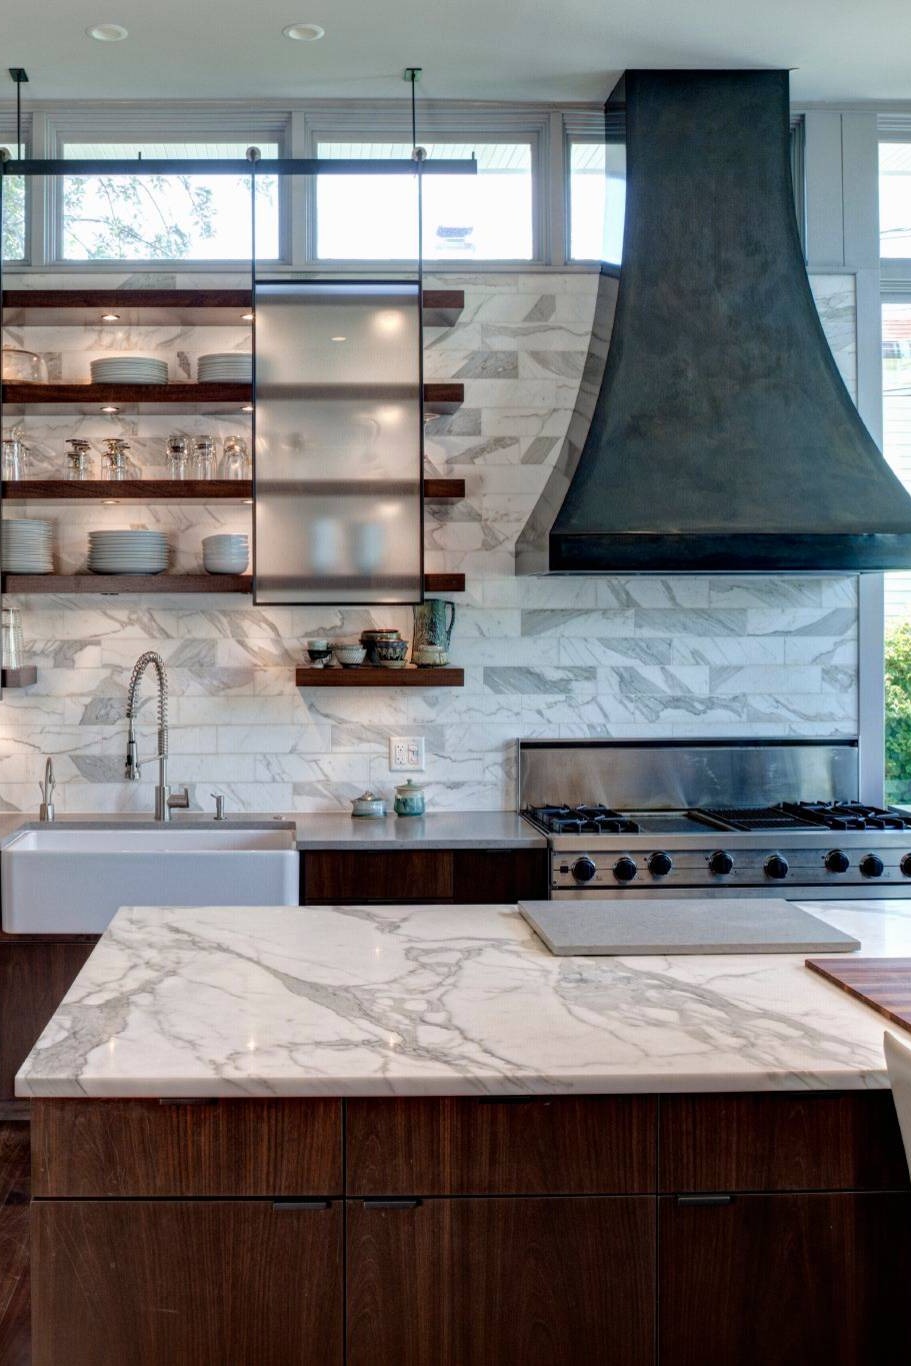 Stainless Steel Backsplash Sleek Hood Kitchen Space Marble Counters Even More Visual Interest